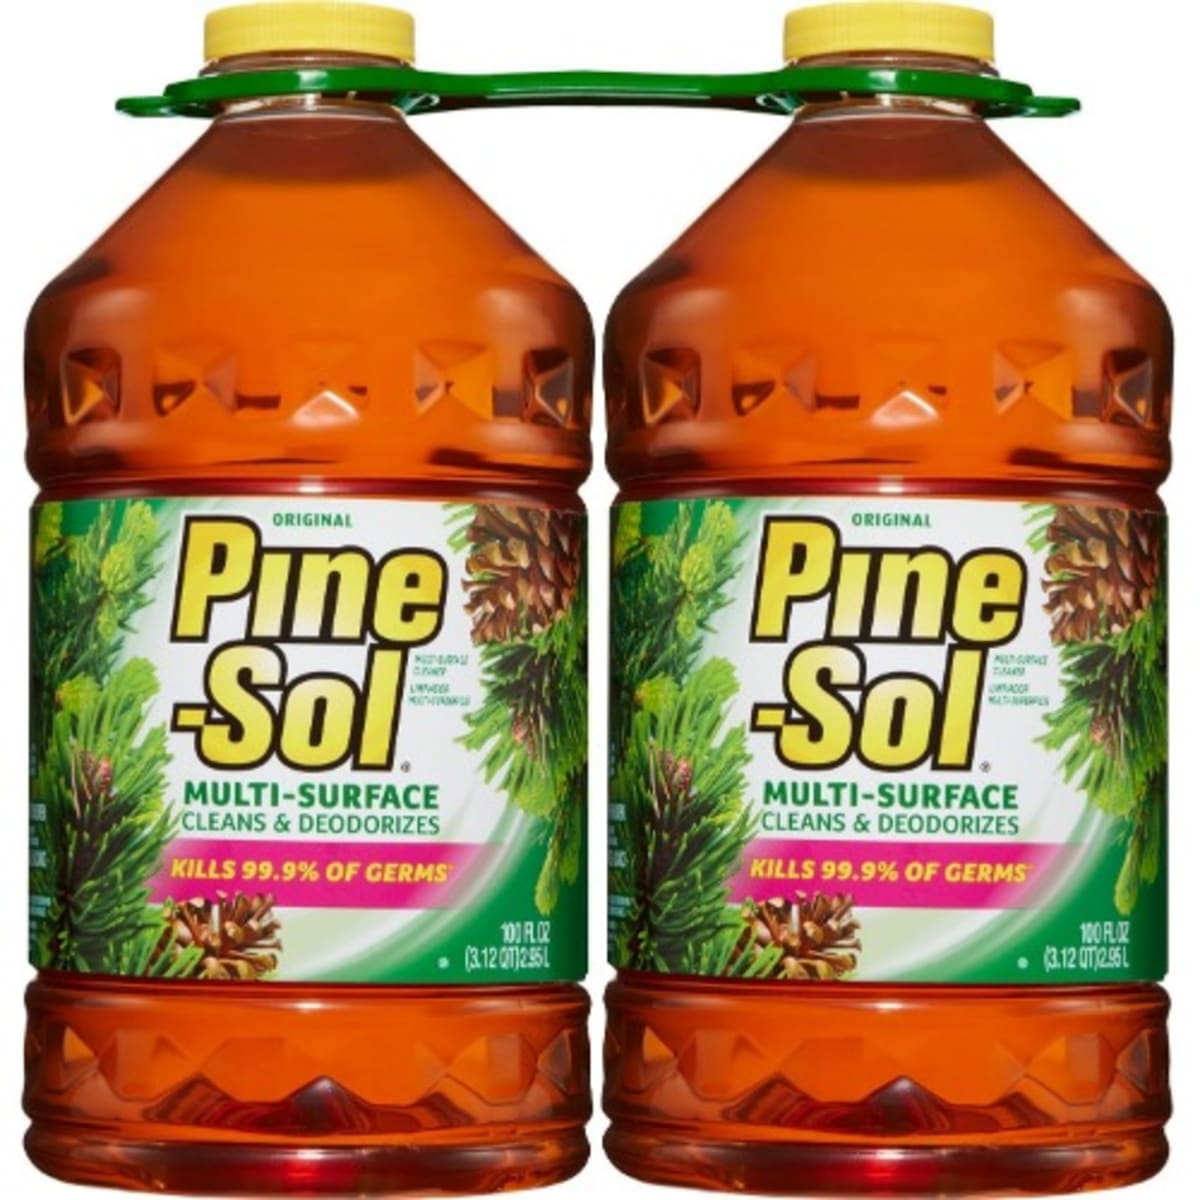 Pine Sol Multi-surface Cleaner - Original - 2.55L X 2